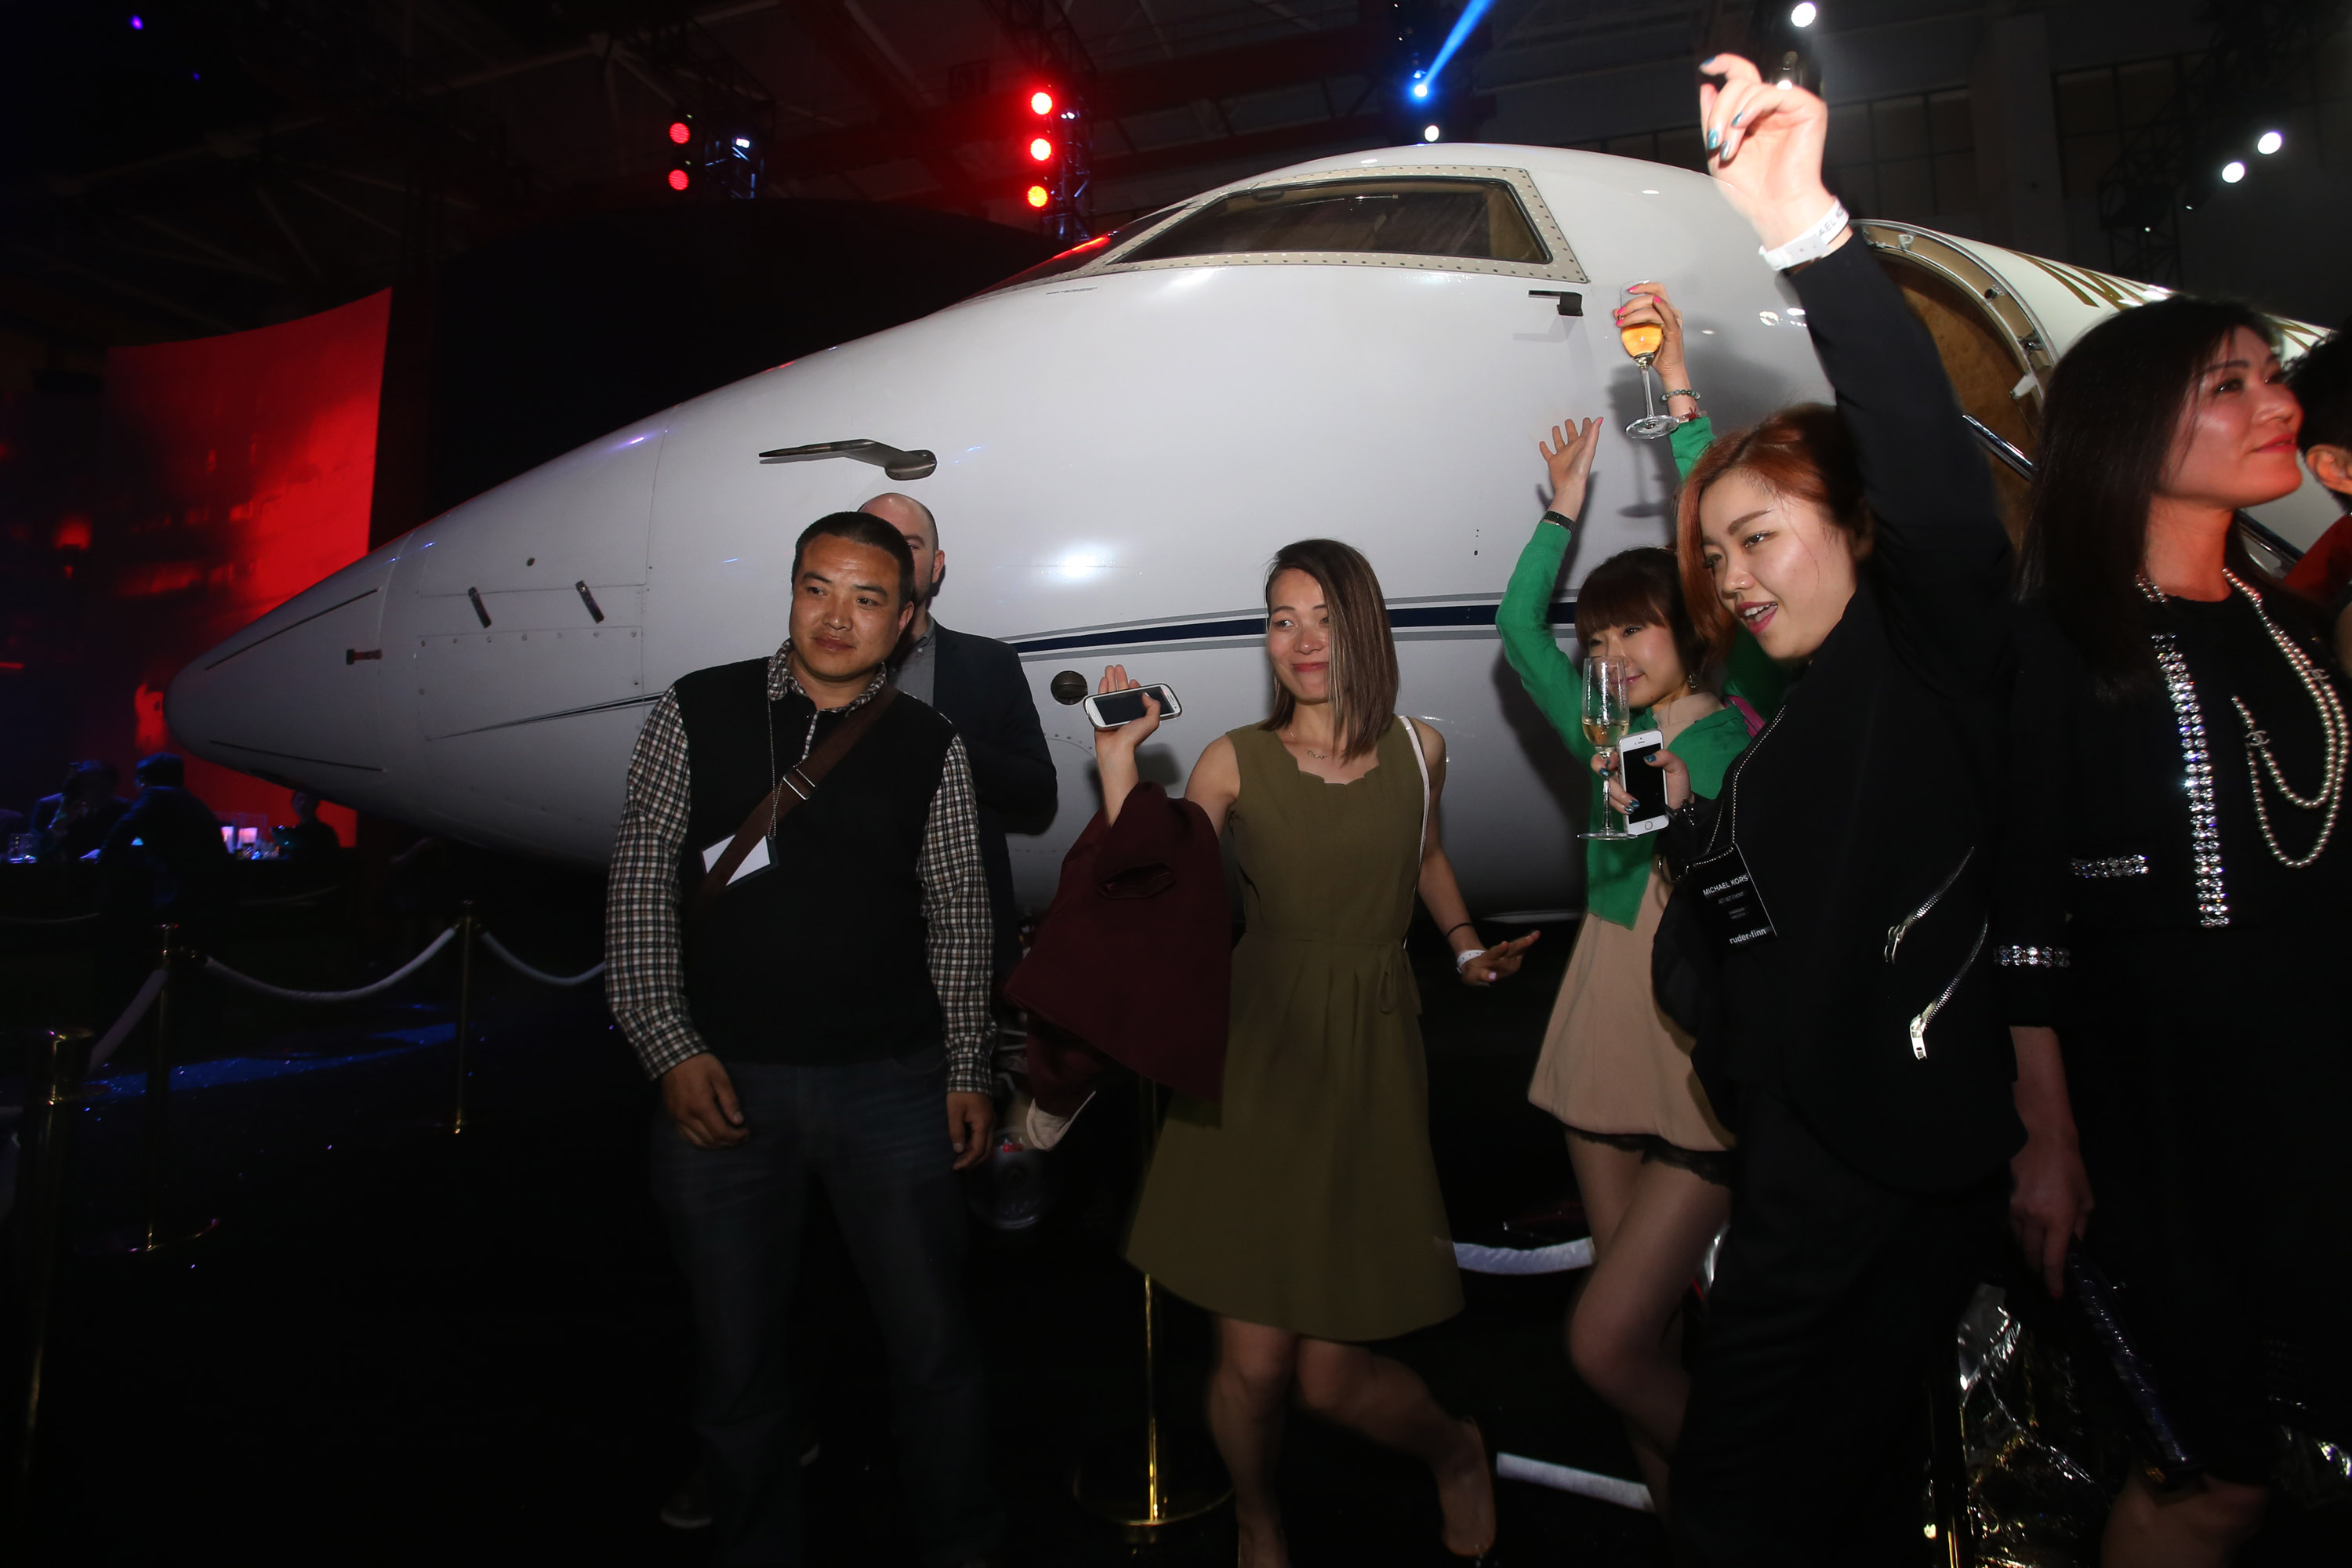 The Michael Kors Jet Set Experience, Shanghai 2014 - Party